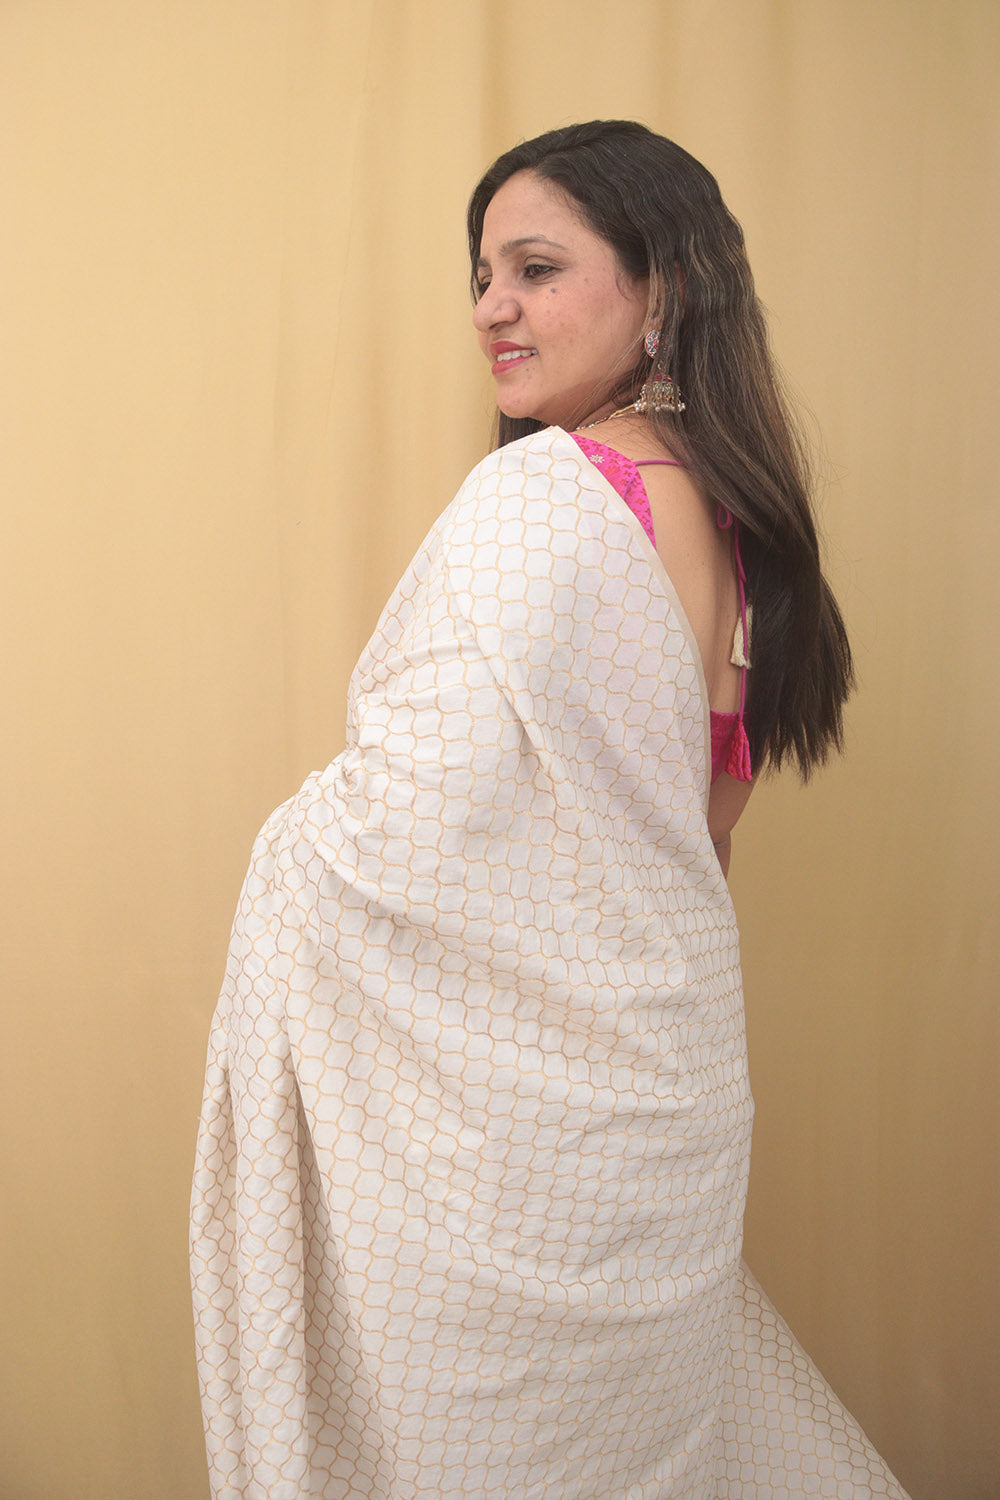 Dazzling Banarasi Silk Saree: Exquisite Elegance for All Events - Luxurion World